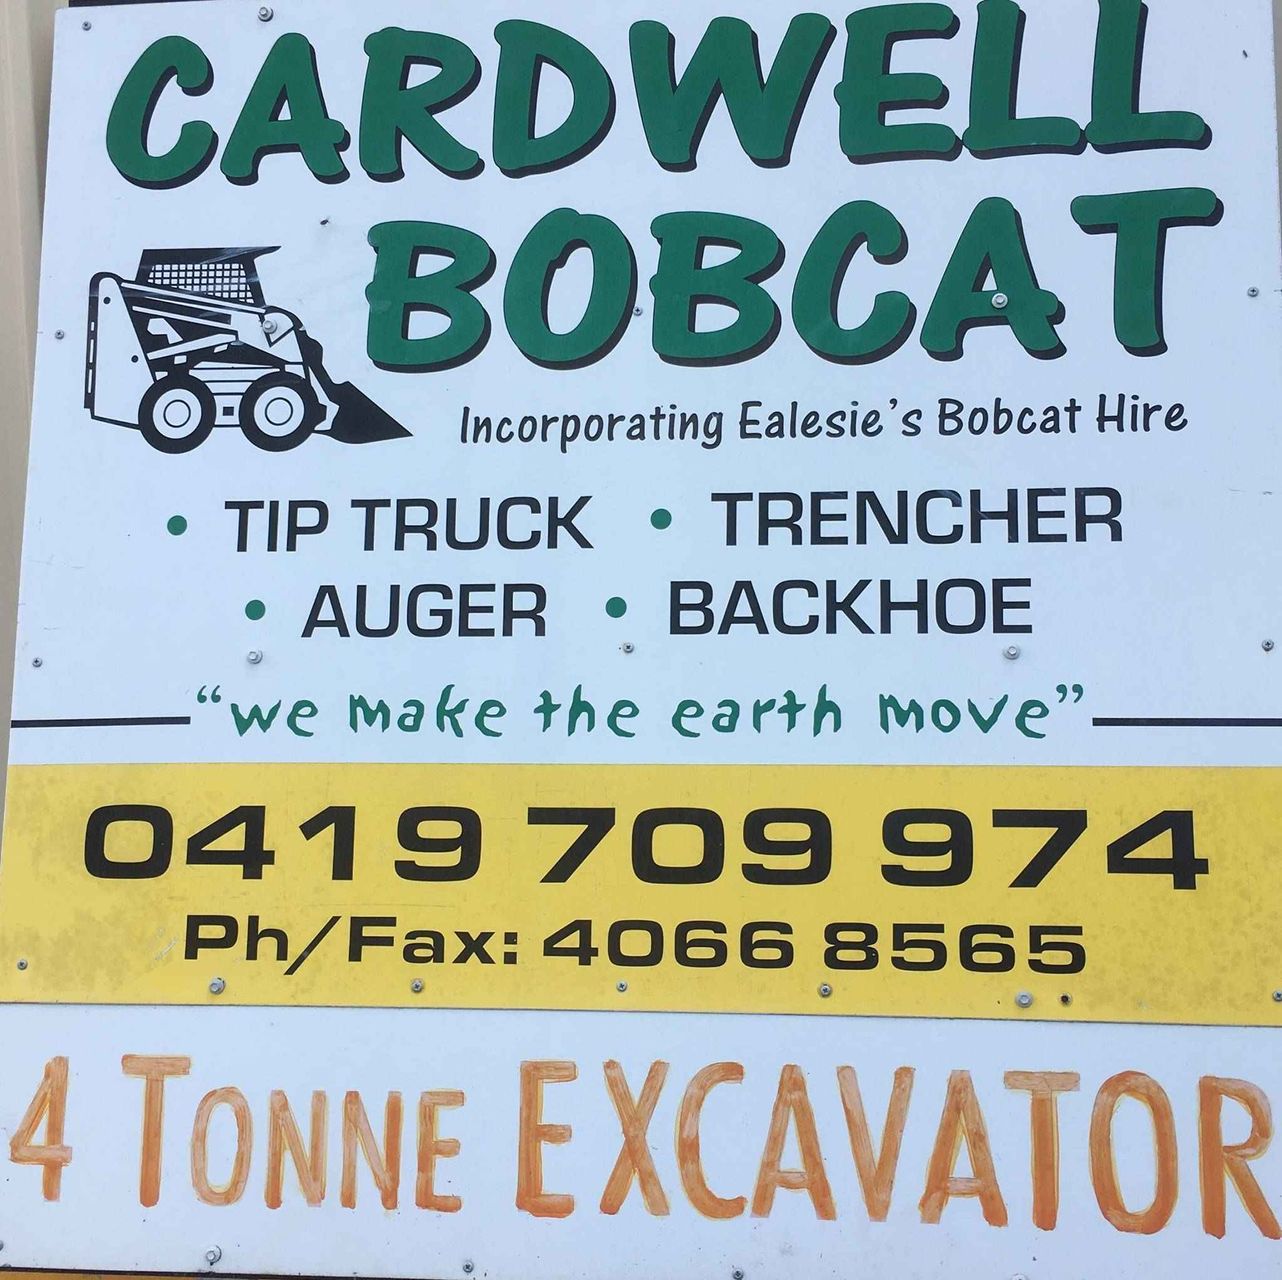 Cardwell Bobcat & Excavator image